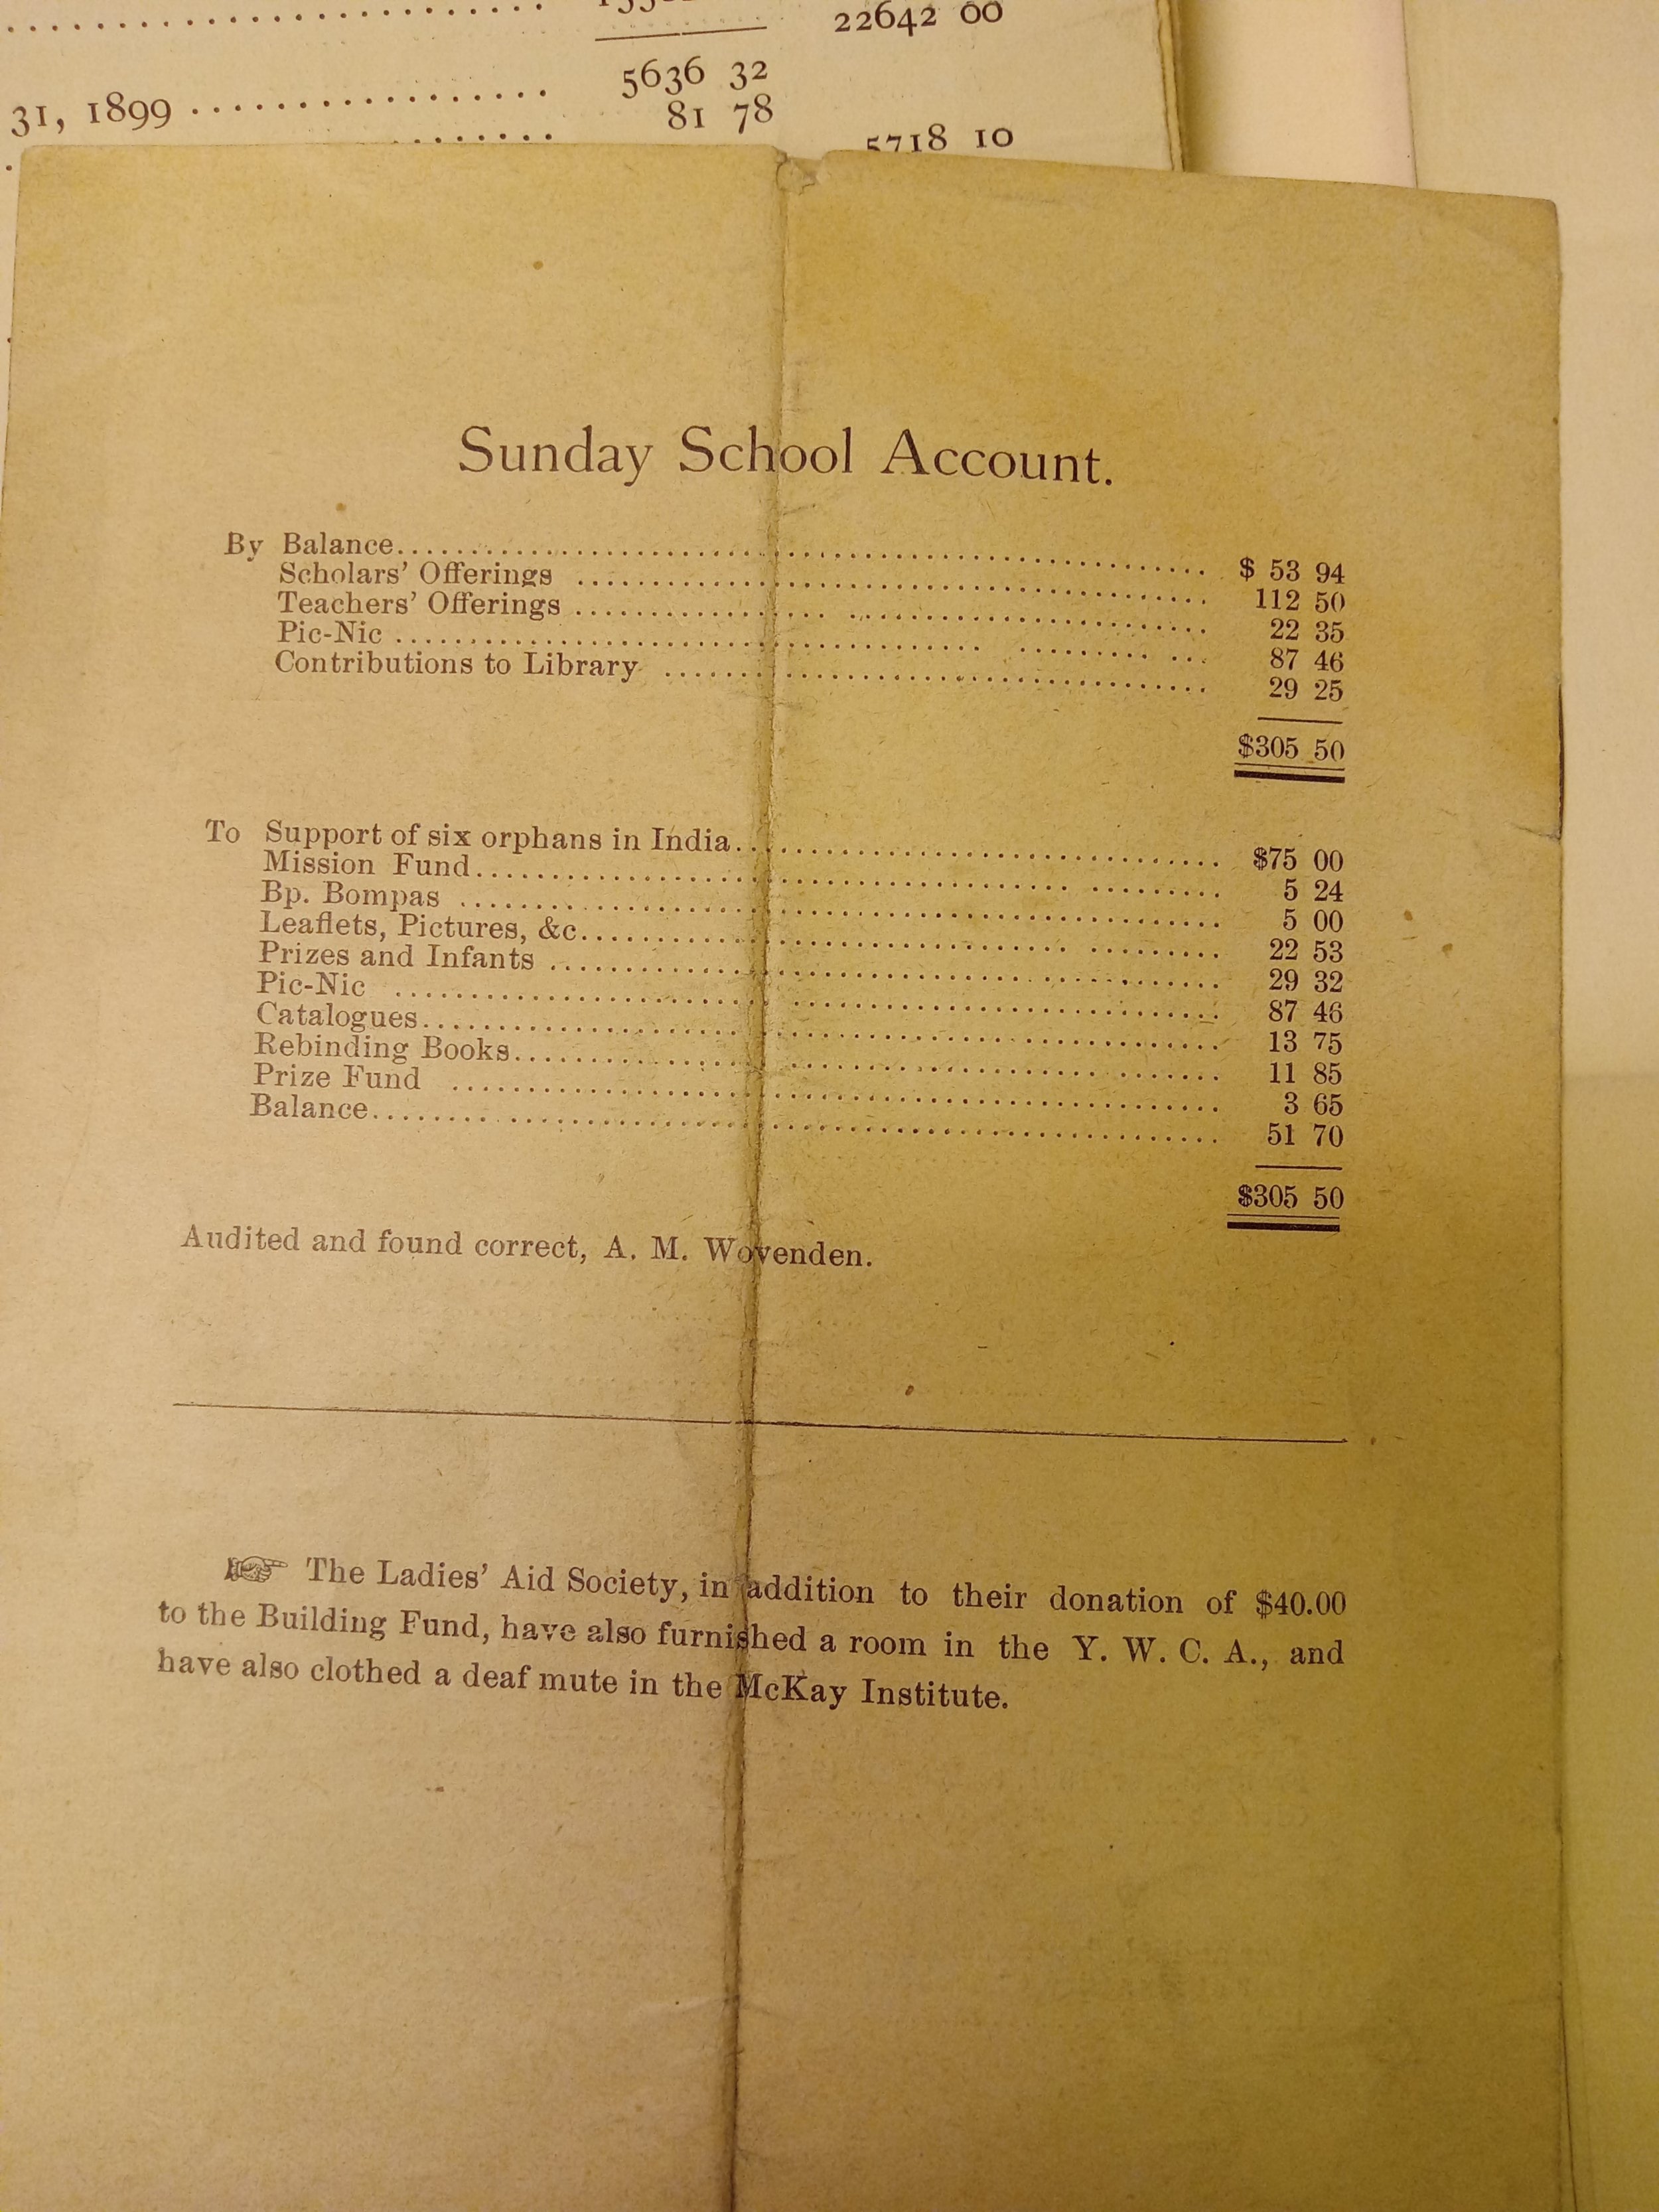 Sunday School Budget 1901.jpg